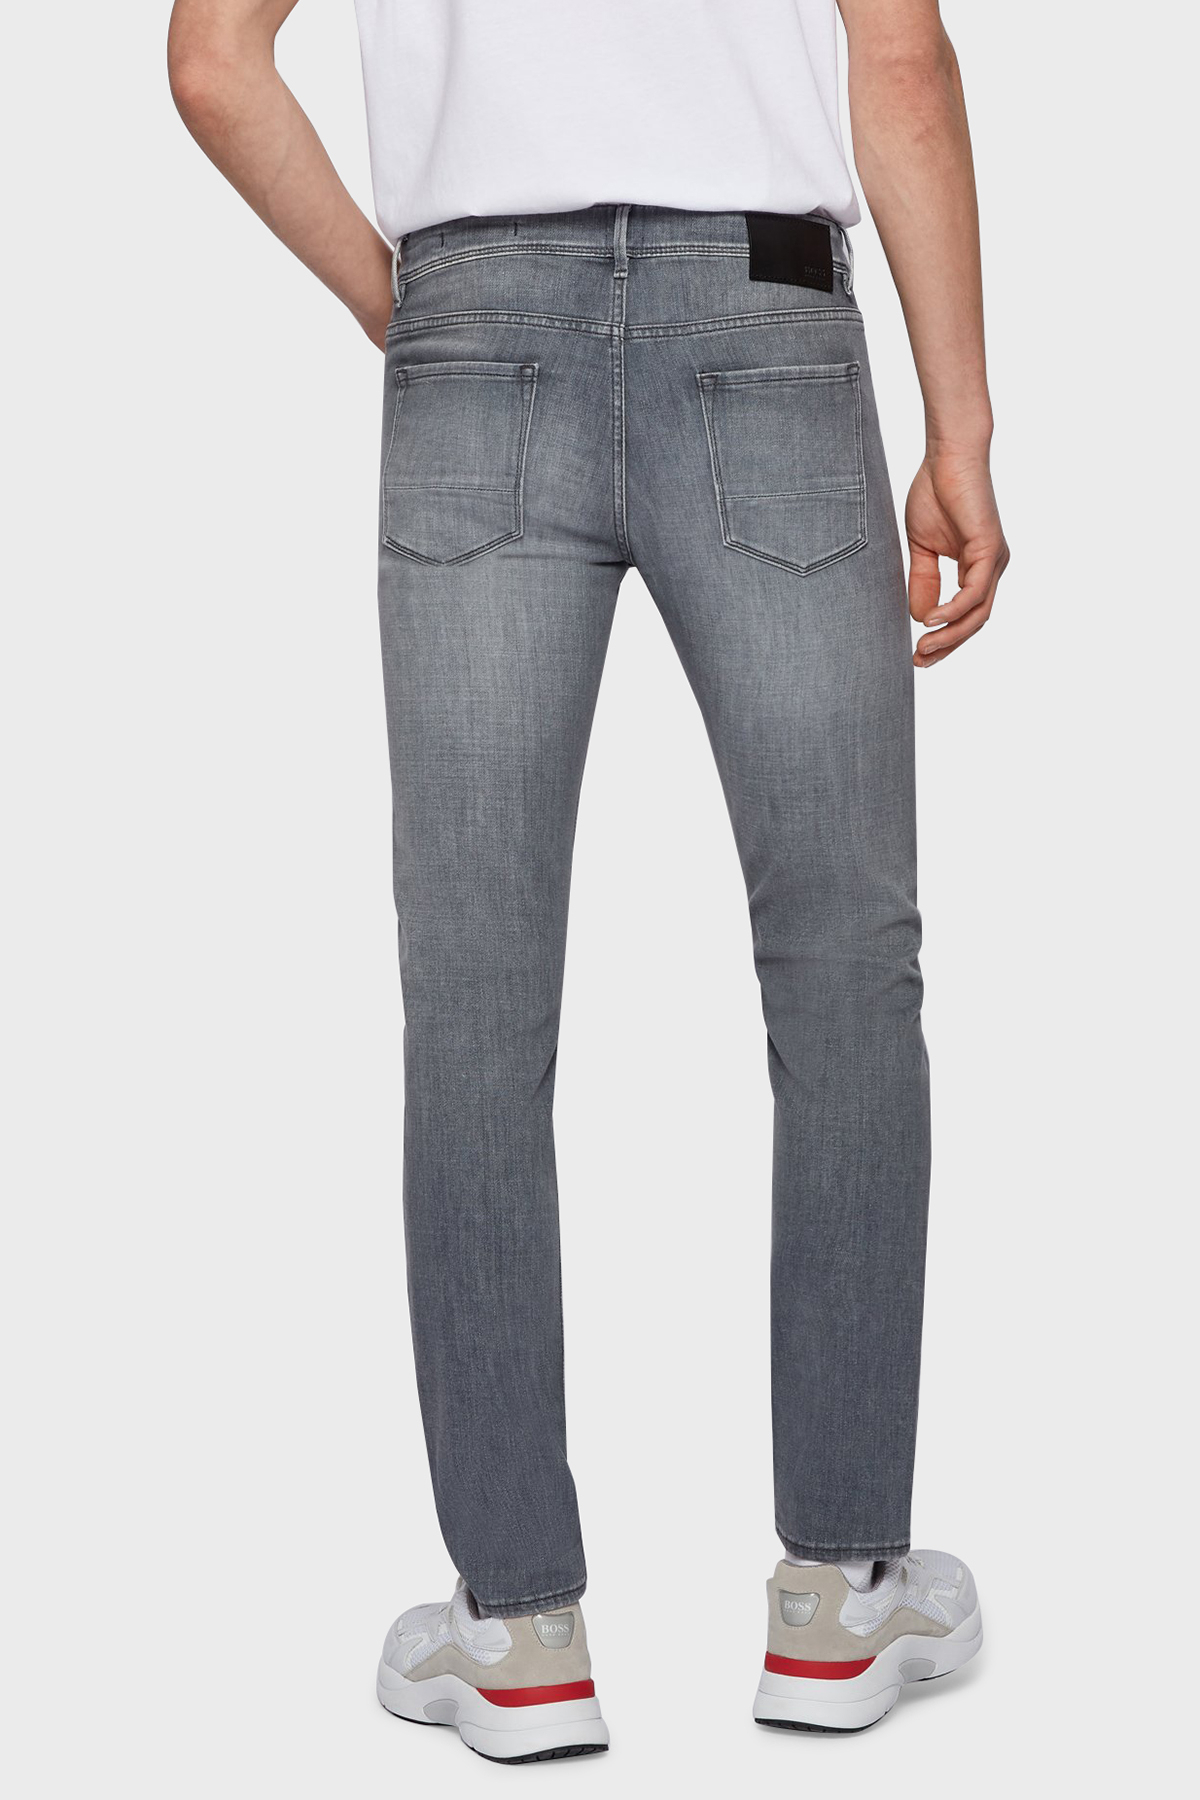 Hugo Boss Extra Slim Fit Düşük Bel Pamuklu Jeans Erkek Kot Pantolon 50453139 040 GRİ